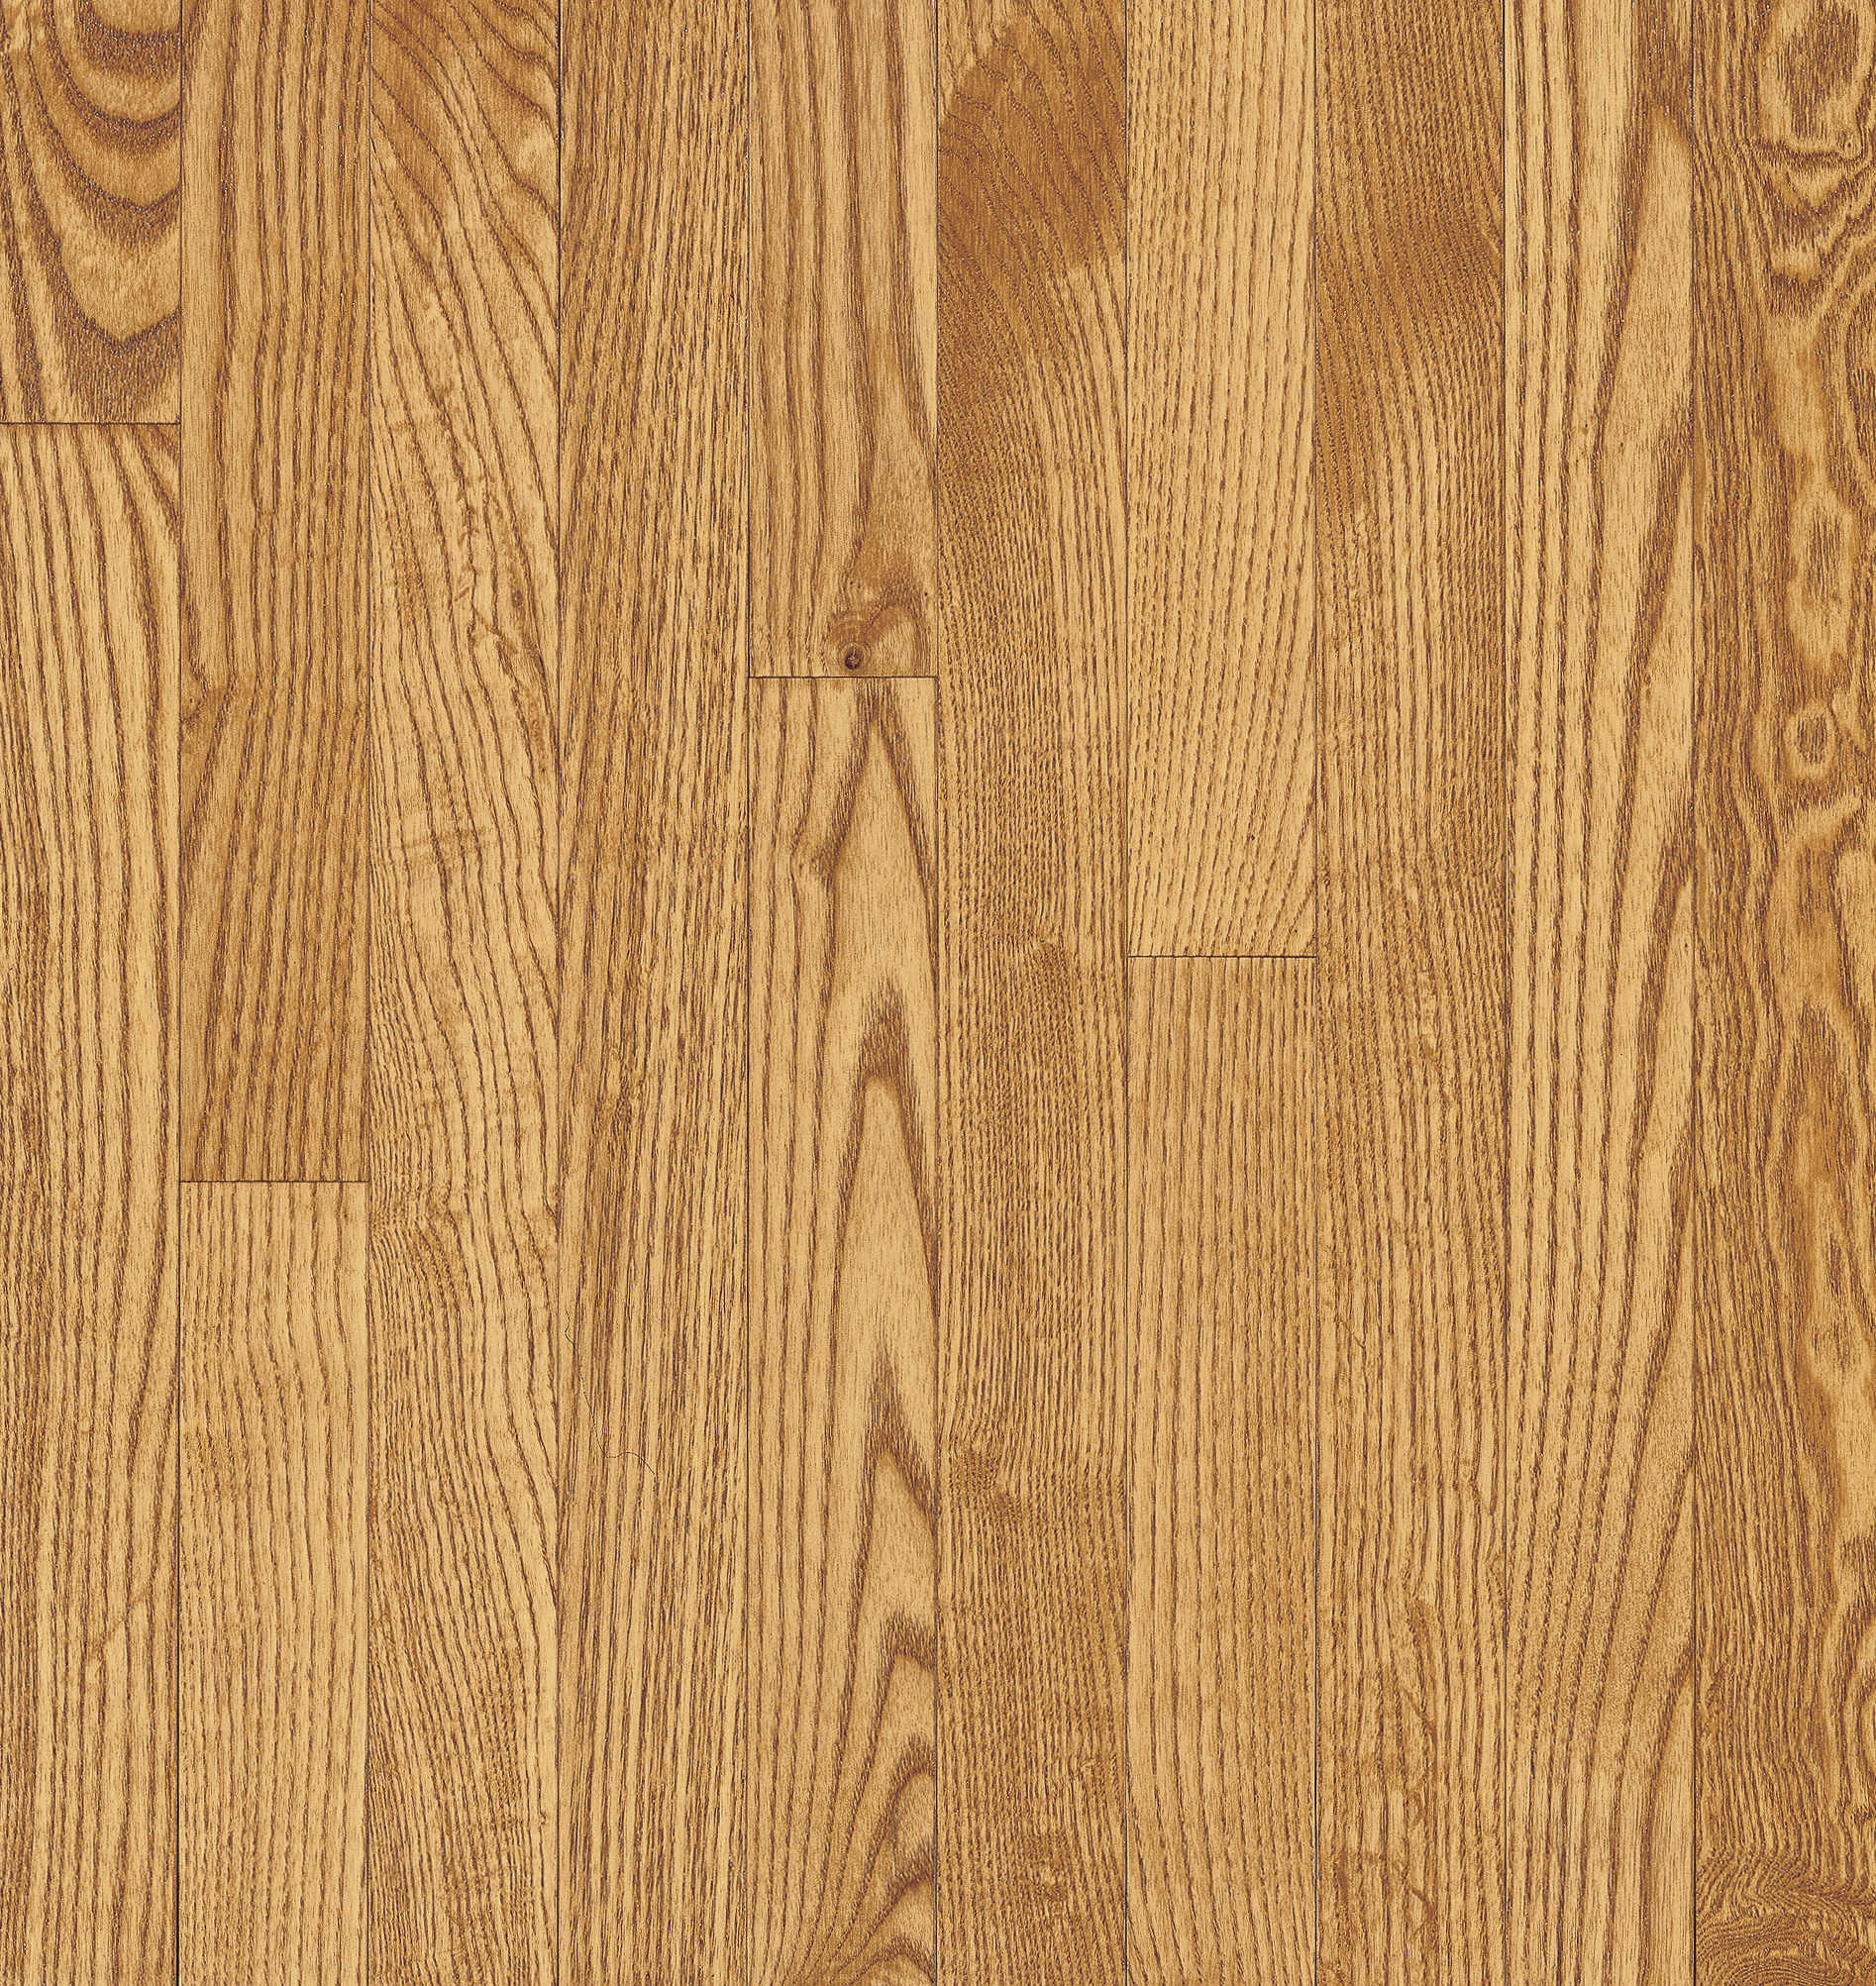 Oak Solid Hardwood Cb730, Bruce Hardwood Floor Polish